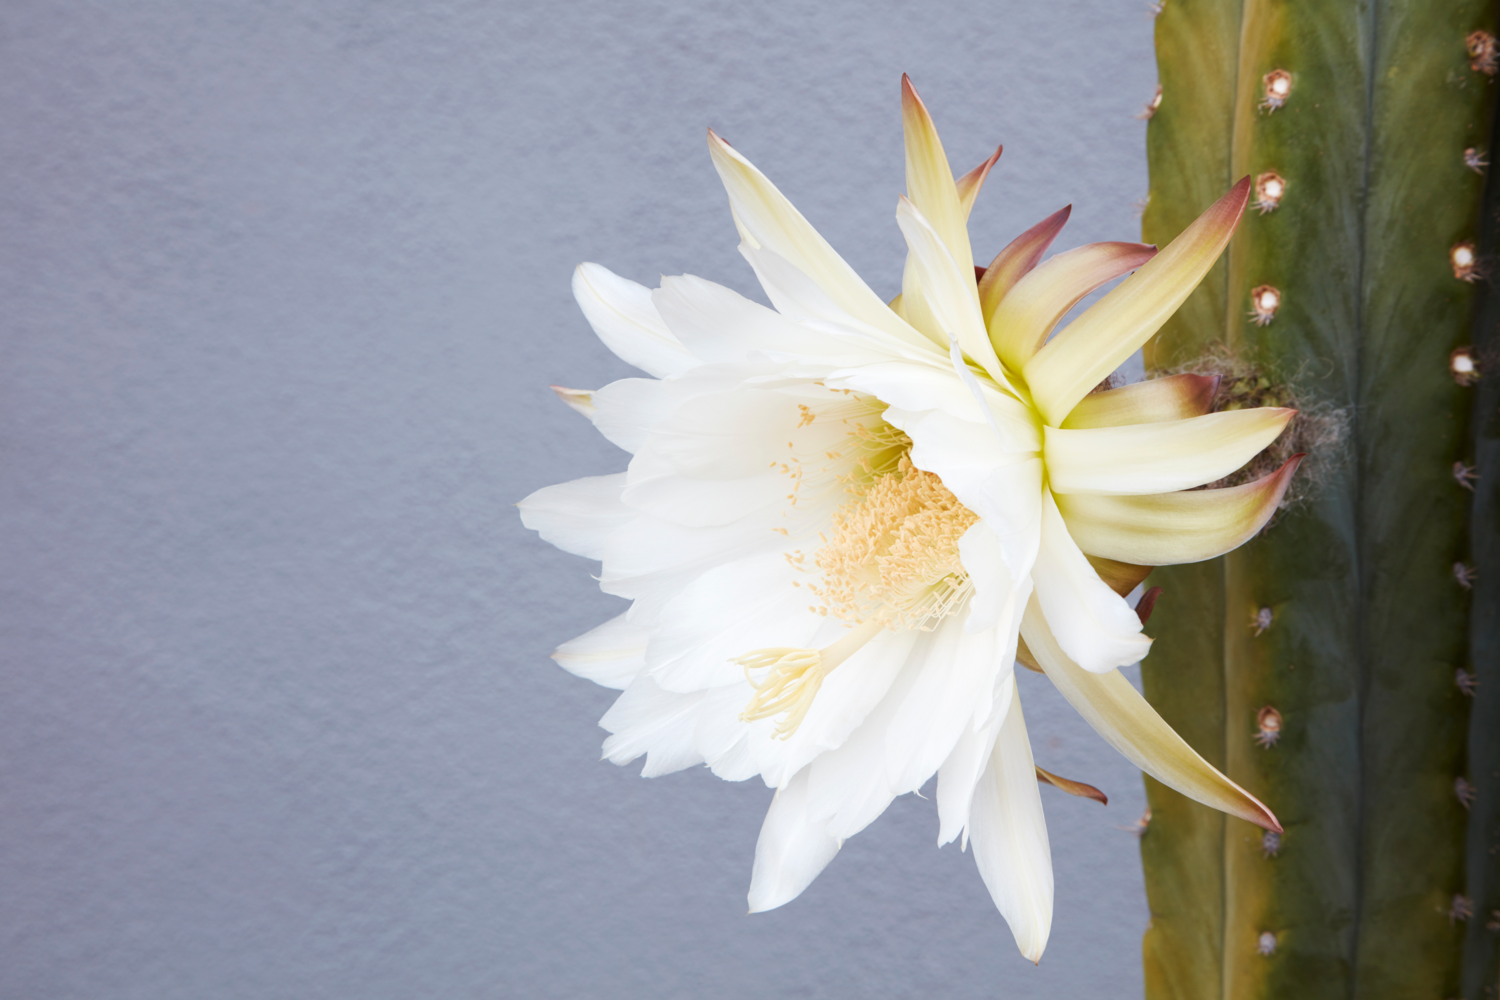 Flora+Grubb+Gardens+San+Pedro+cactus+huge+white+flower+for+San+Francisco+landscape+design.png